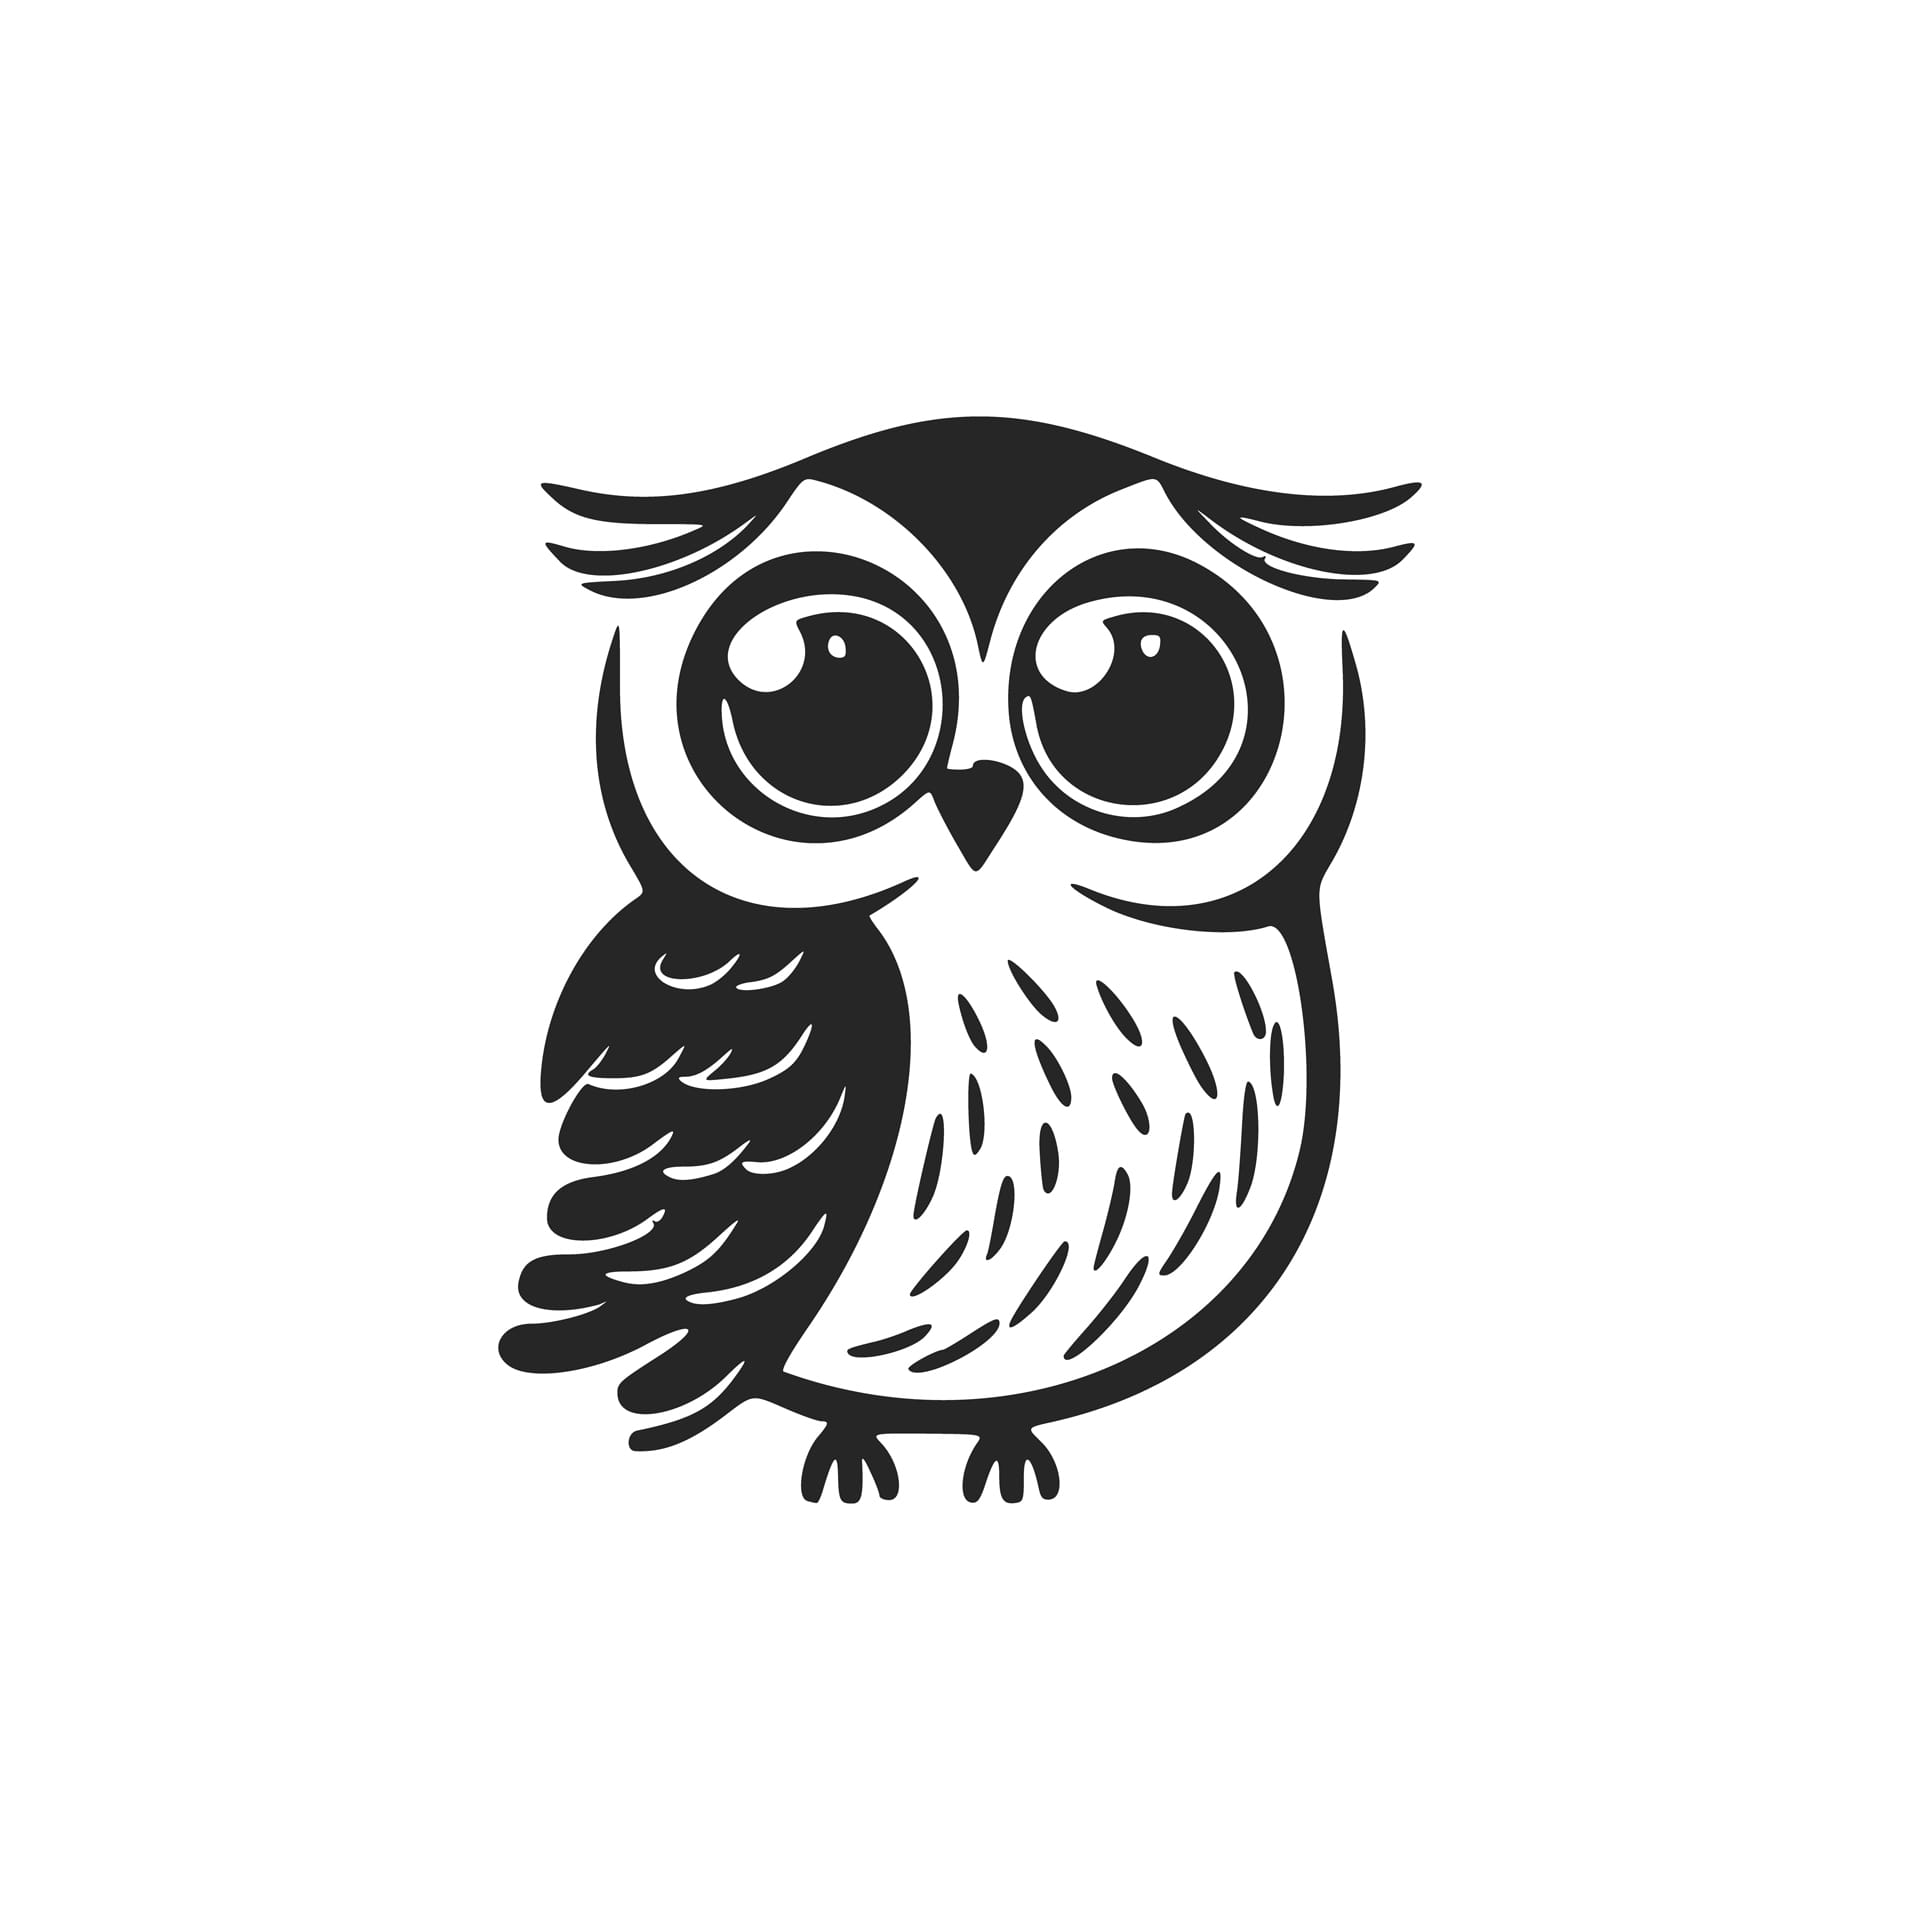 Cute black white owl logo image bird profile picture